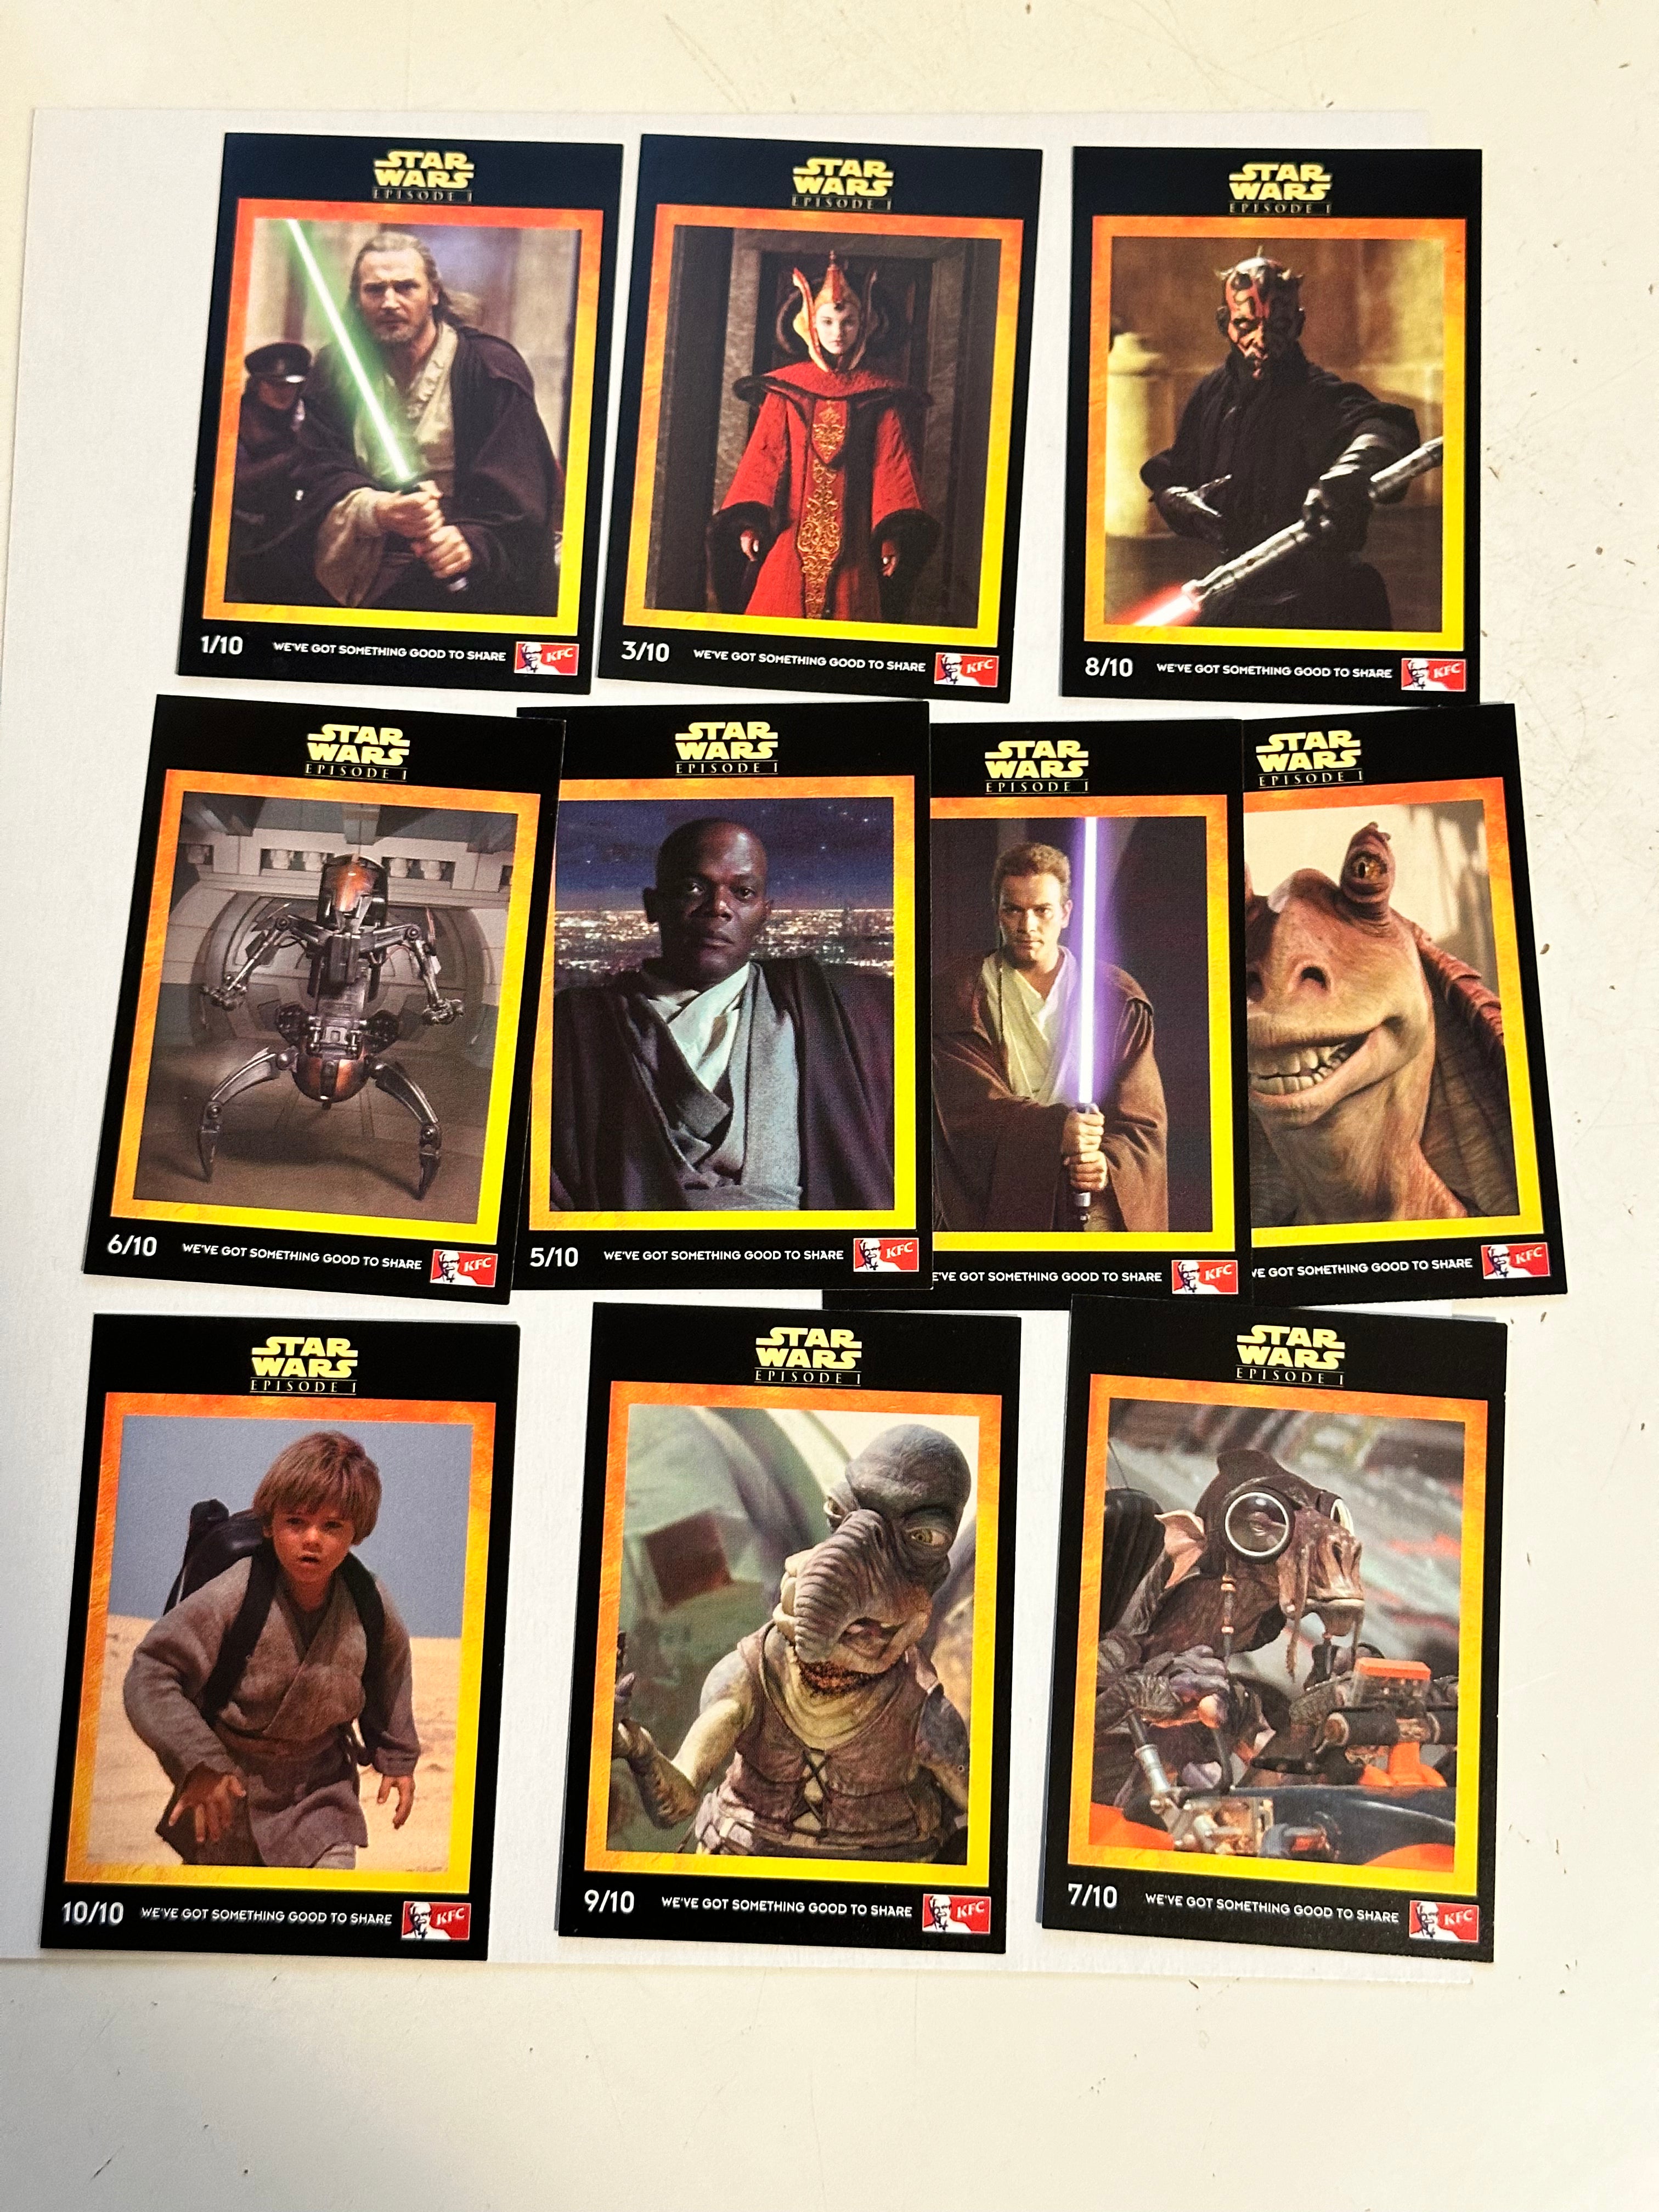 Star Wars Episode 1 KFC rare insert cards set 1999